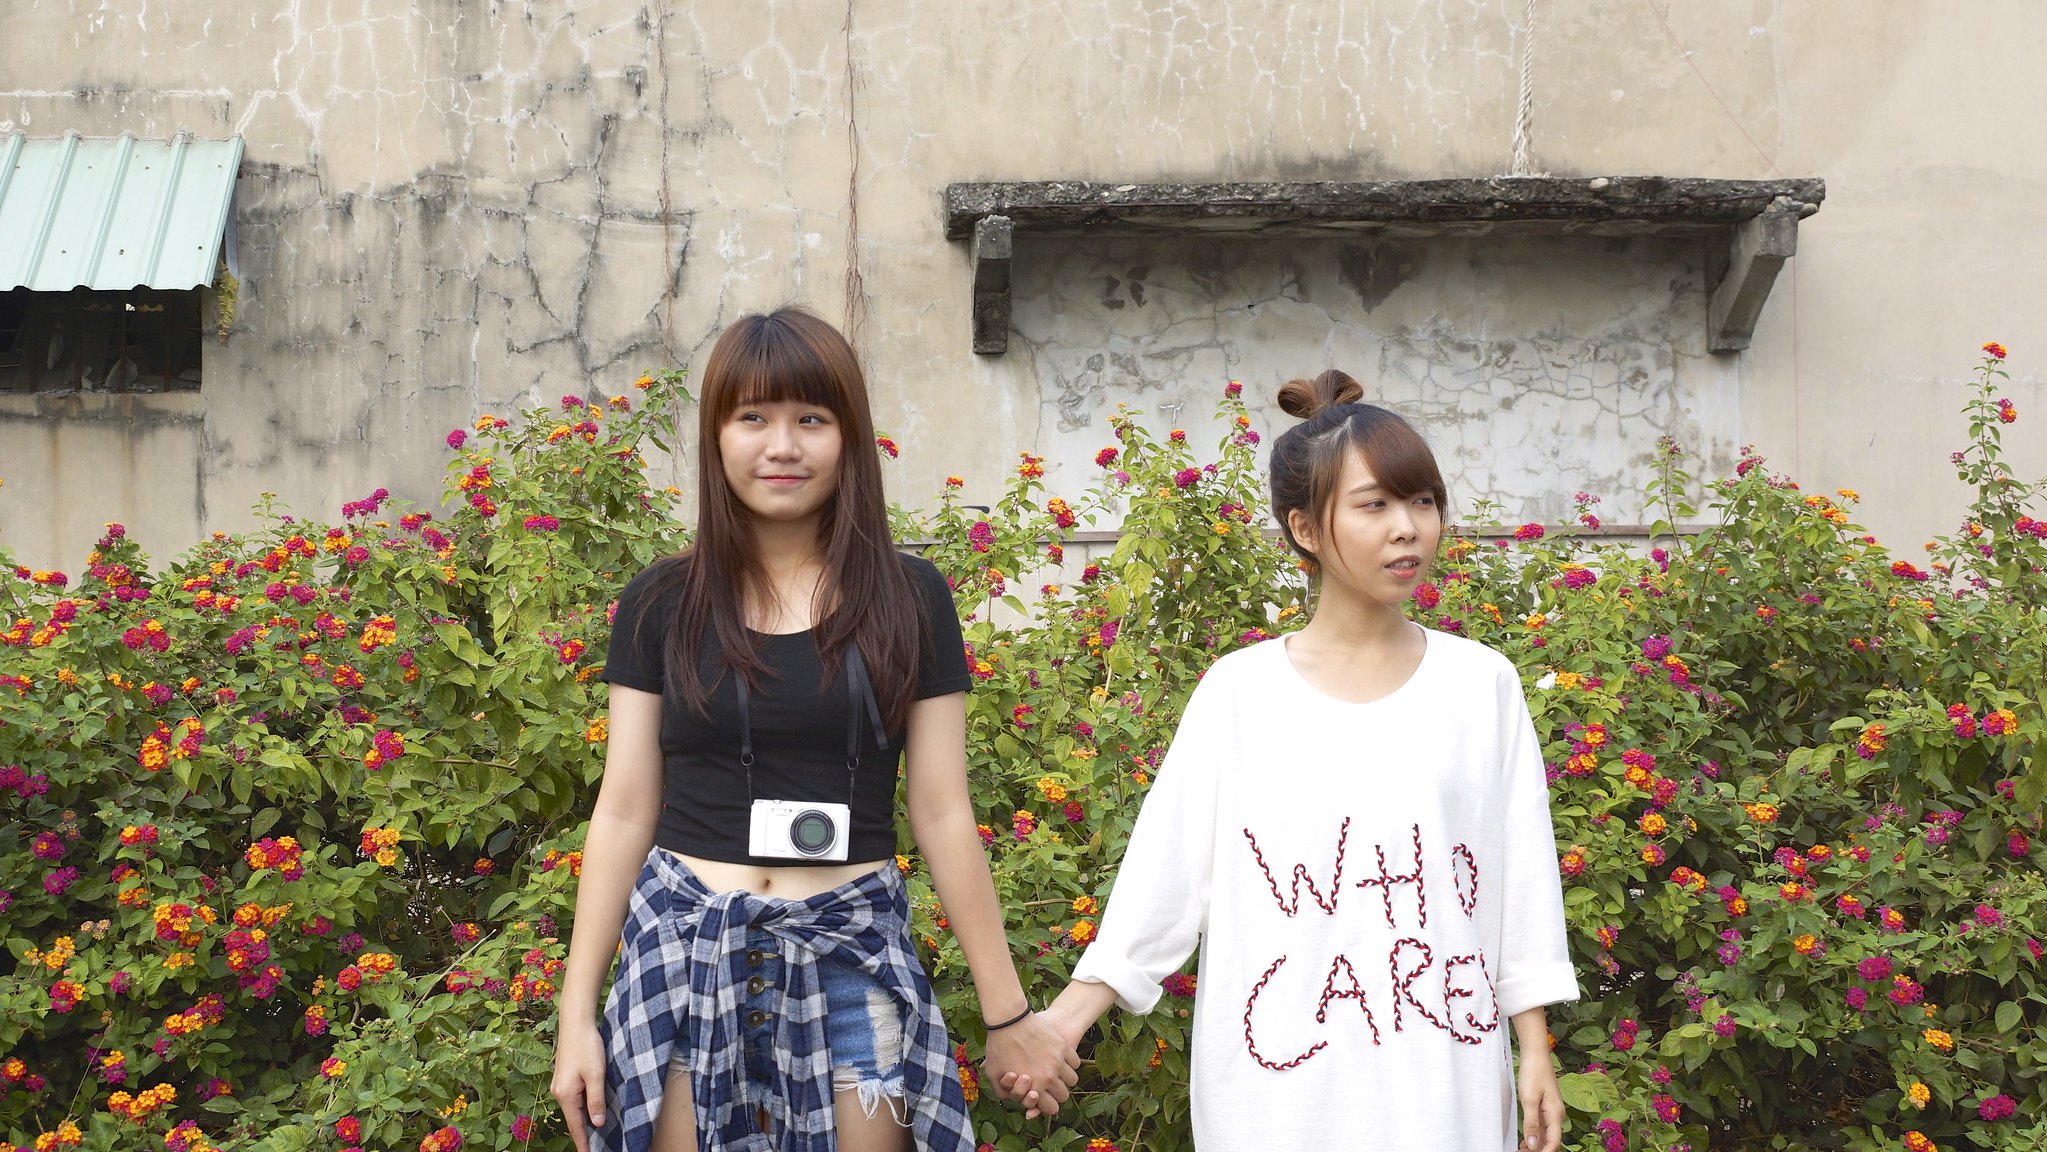 Asian Women Model Two Women Women Outdoors Urban Holding Hands Camera Shirt Black Top Plants Looking 2047x1152